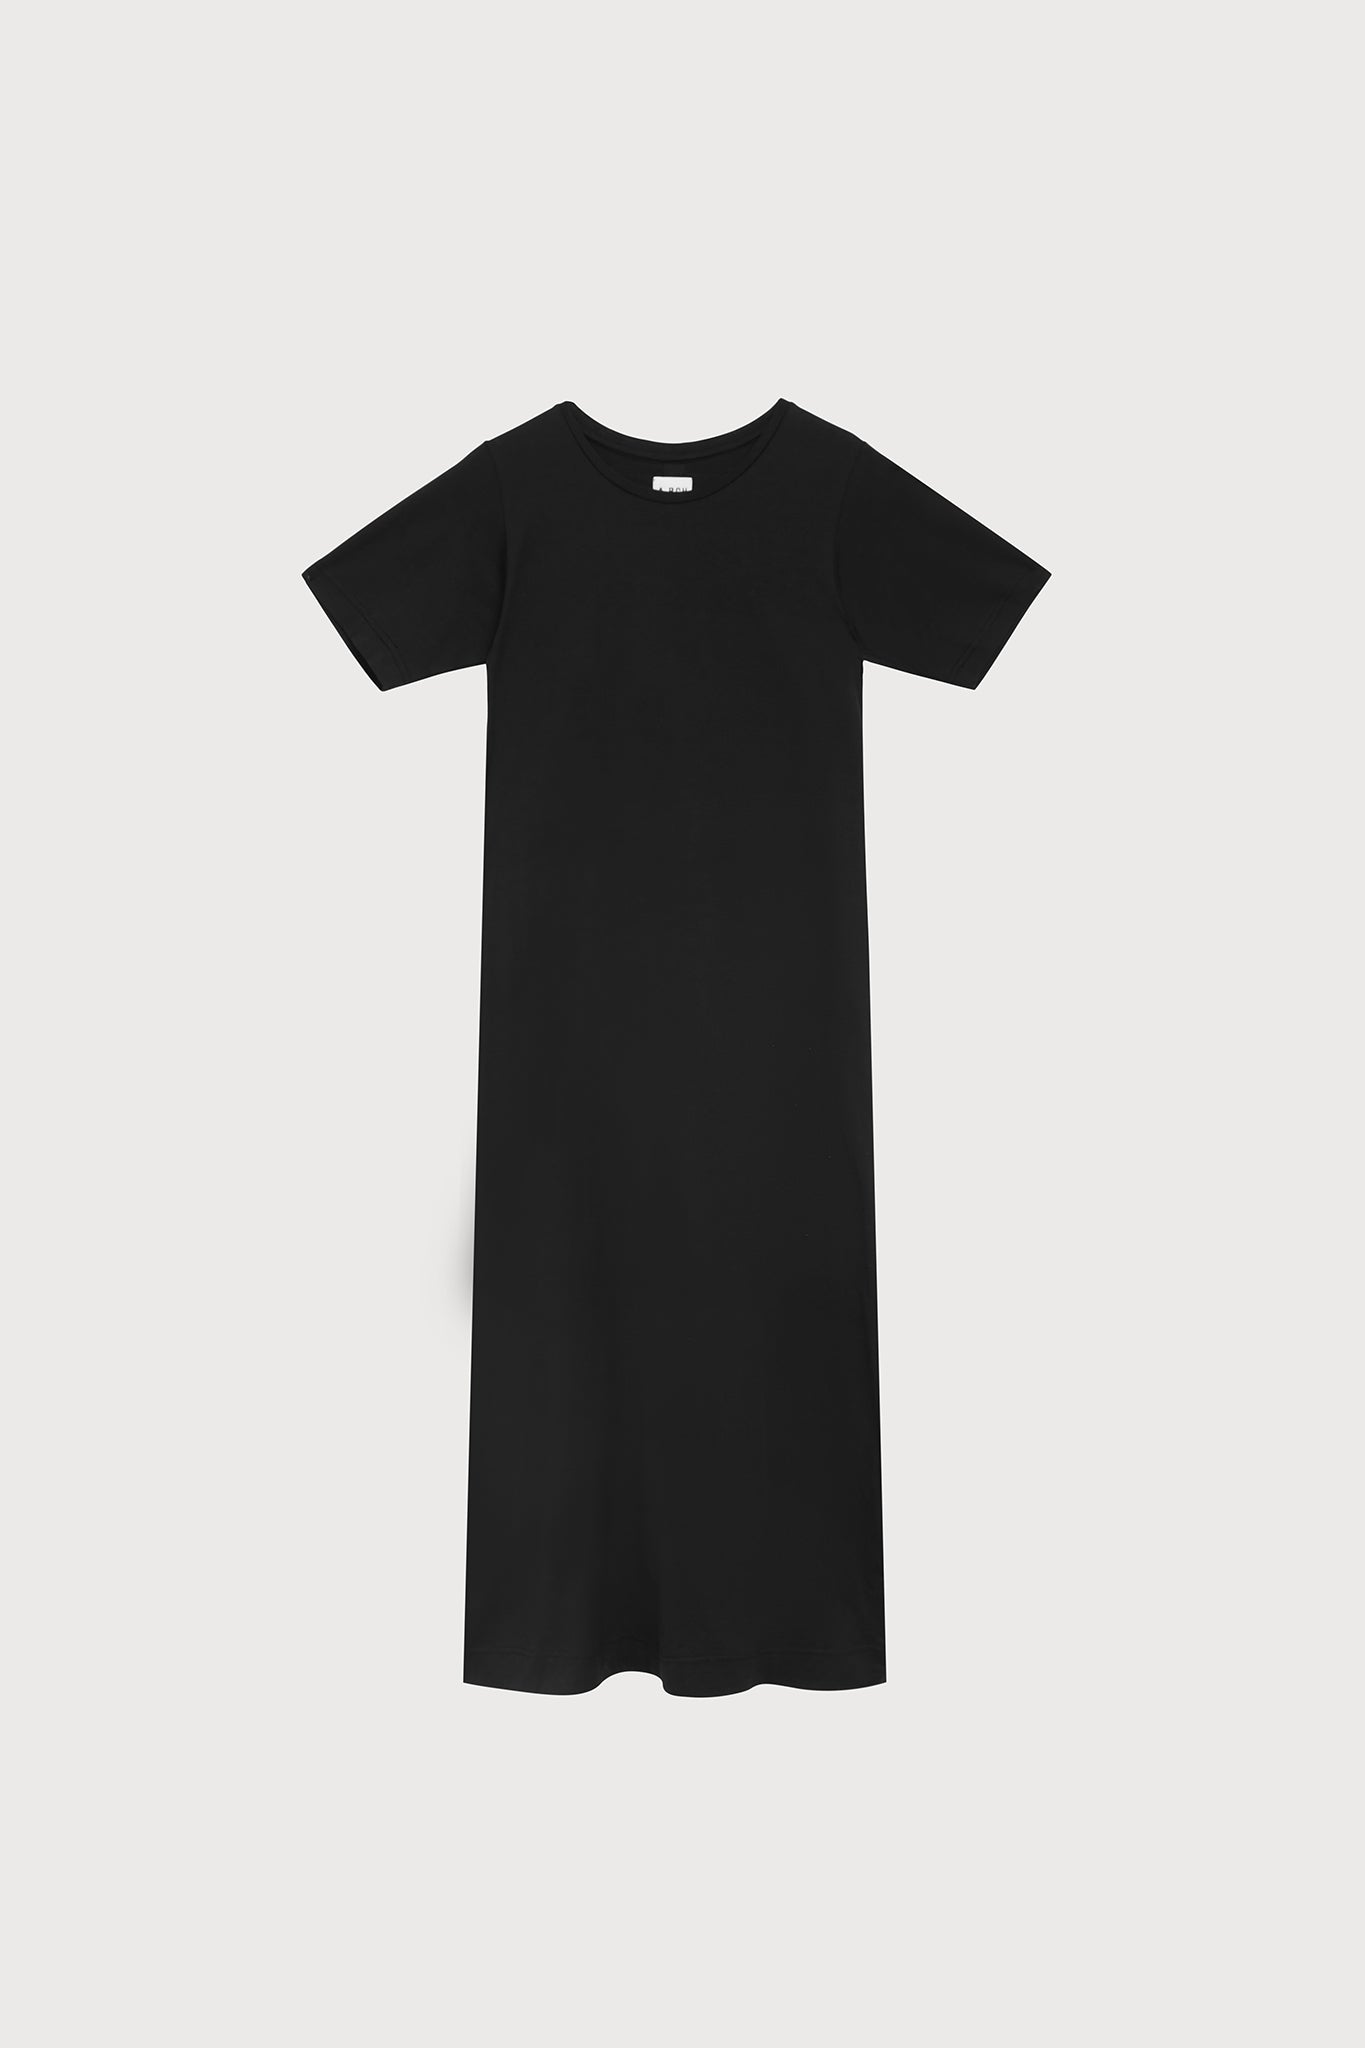 A.56 Black Maxi T-shirt Dress in Australian Cotton